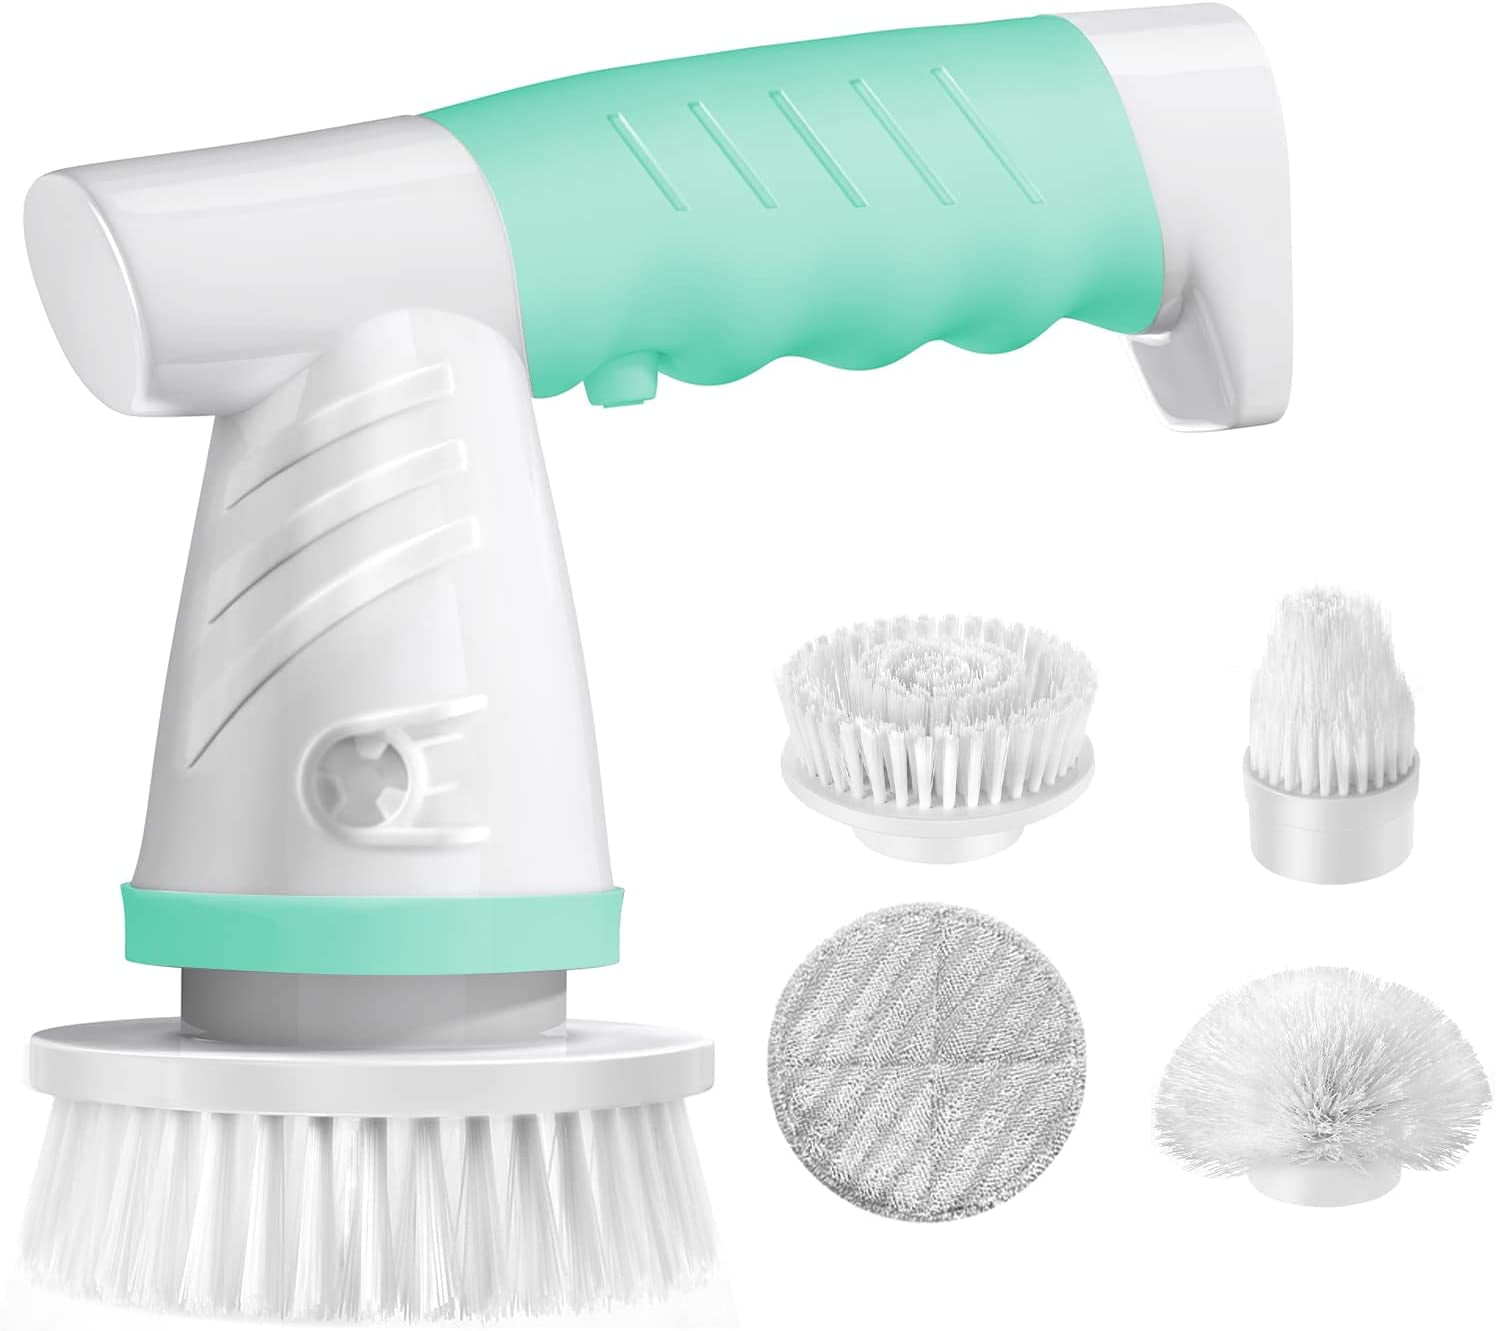 NOVA Electric Scrubber Brush 2.0, Handheld Cordless Rechargeable Bathroom  Spin Brush for Cleaning Tub/Tile/Floor/Sink/Window | Stronger Motor &  Longer